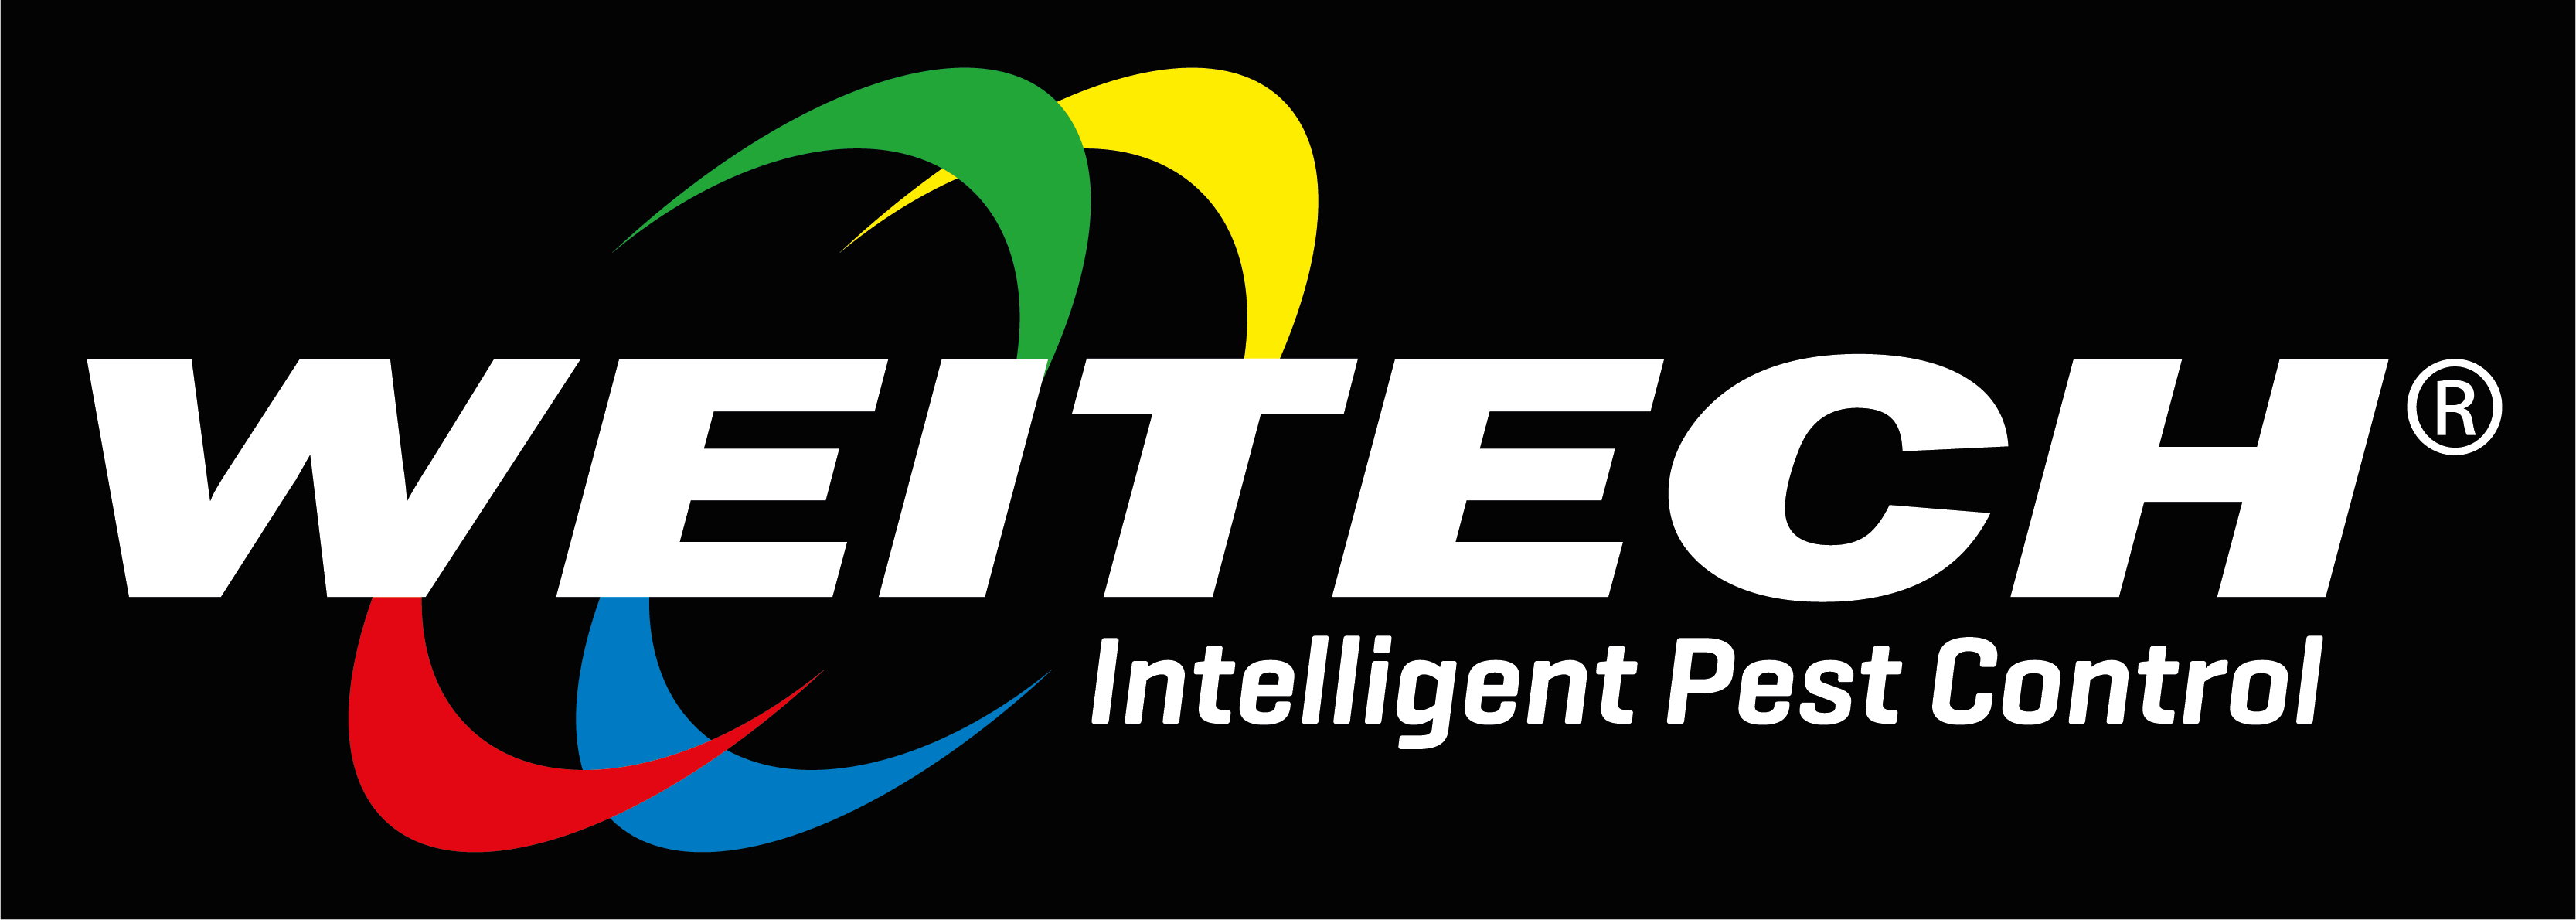 Weitech Logo 2023